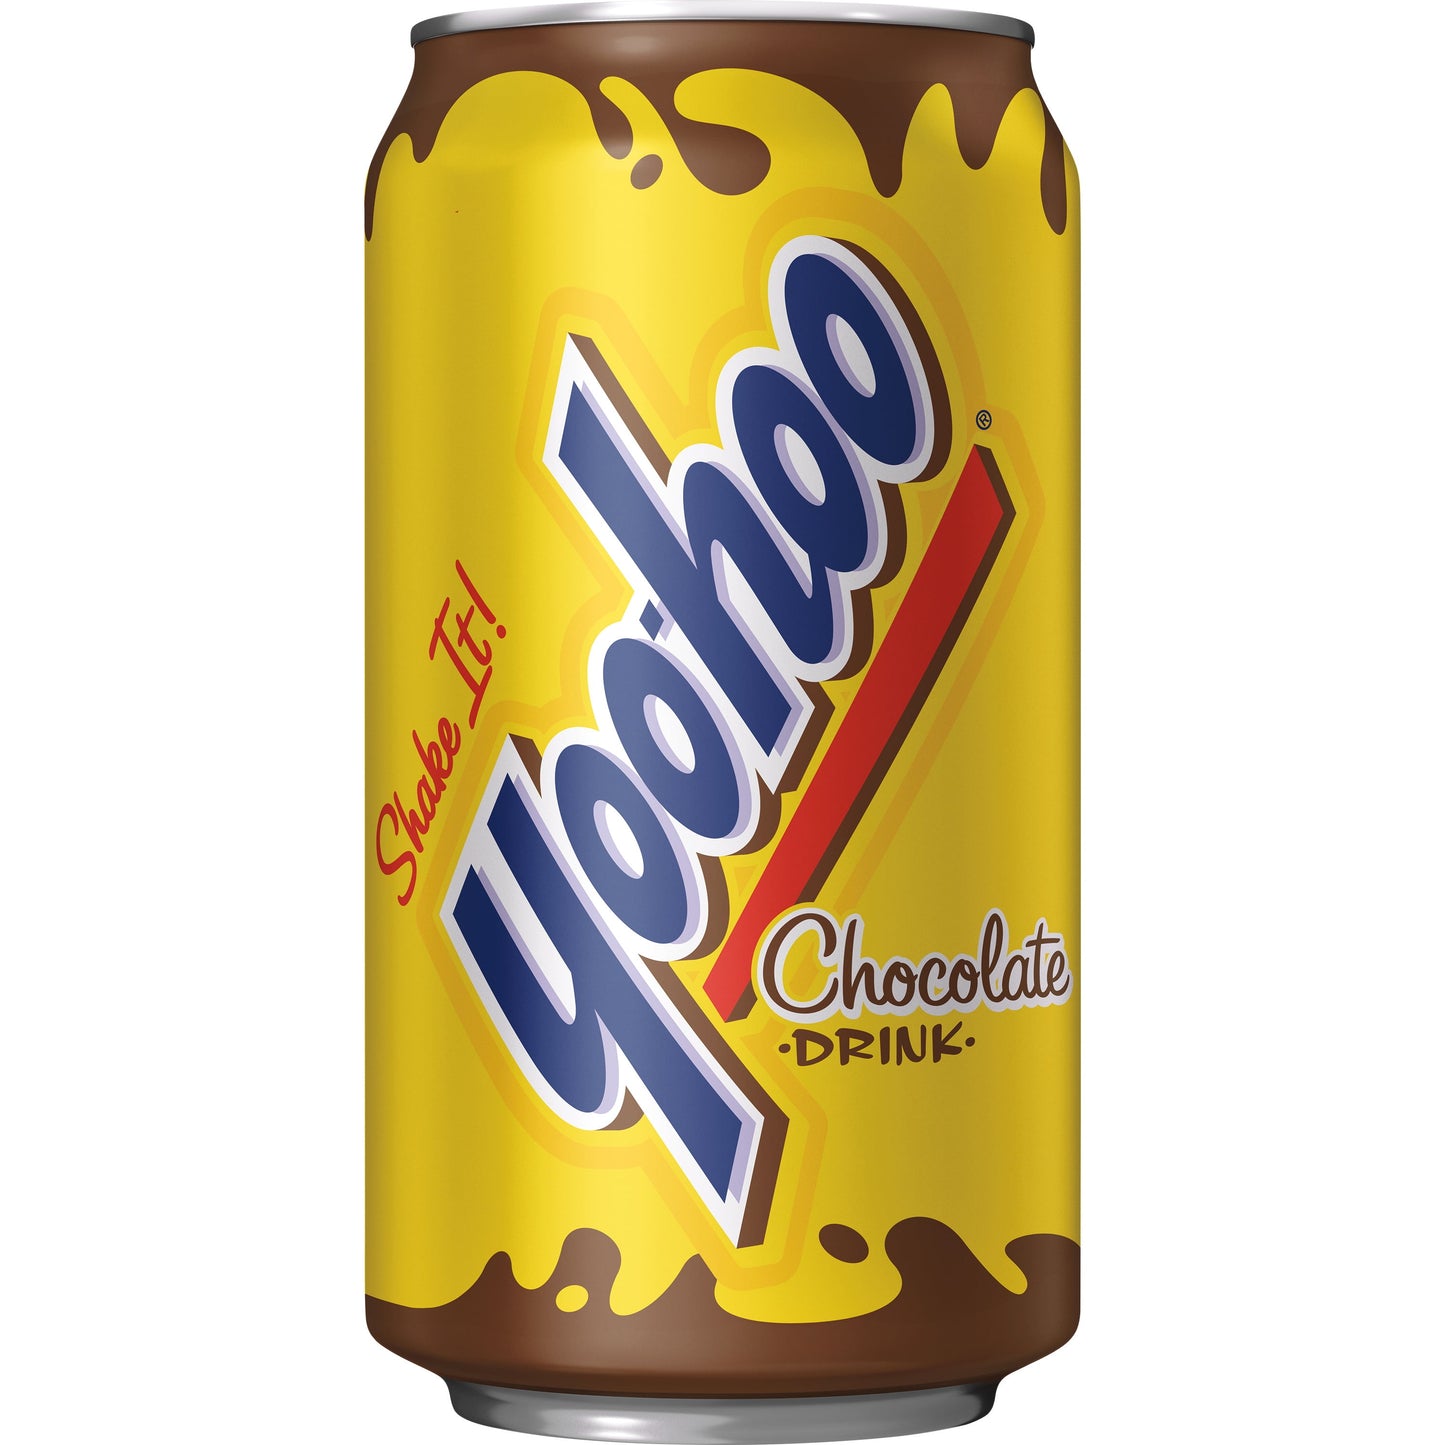 Yoo-hoo Chocolate Drink, 11 fl oz cans, 12 pack